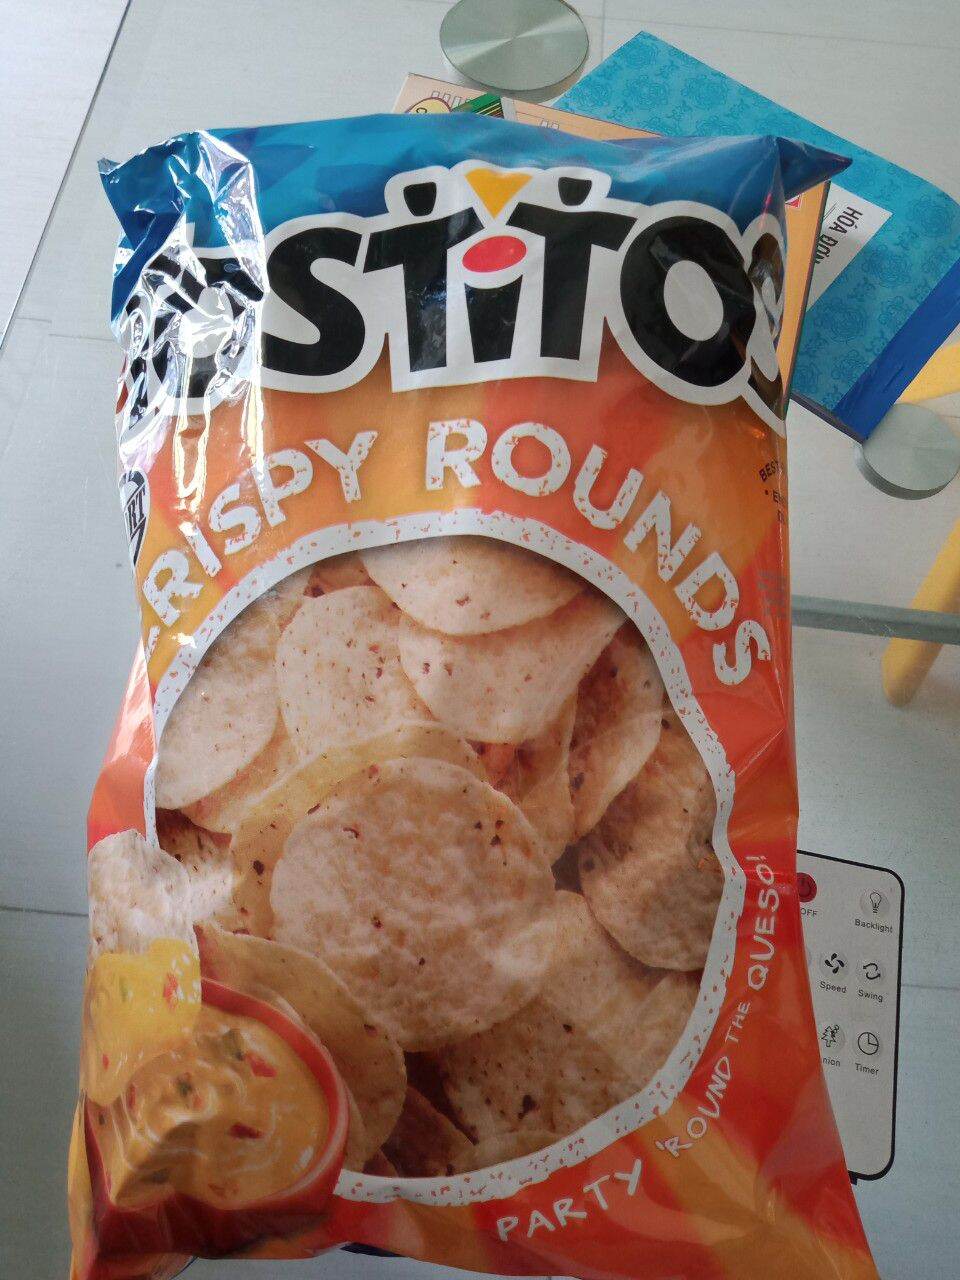 Bánh snack Tostitos Crisry Rounds 283.5g của Mỹ